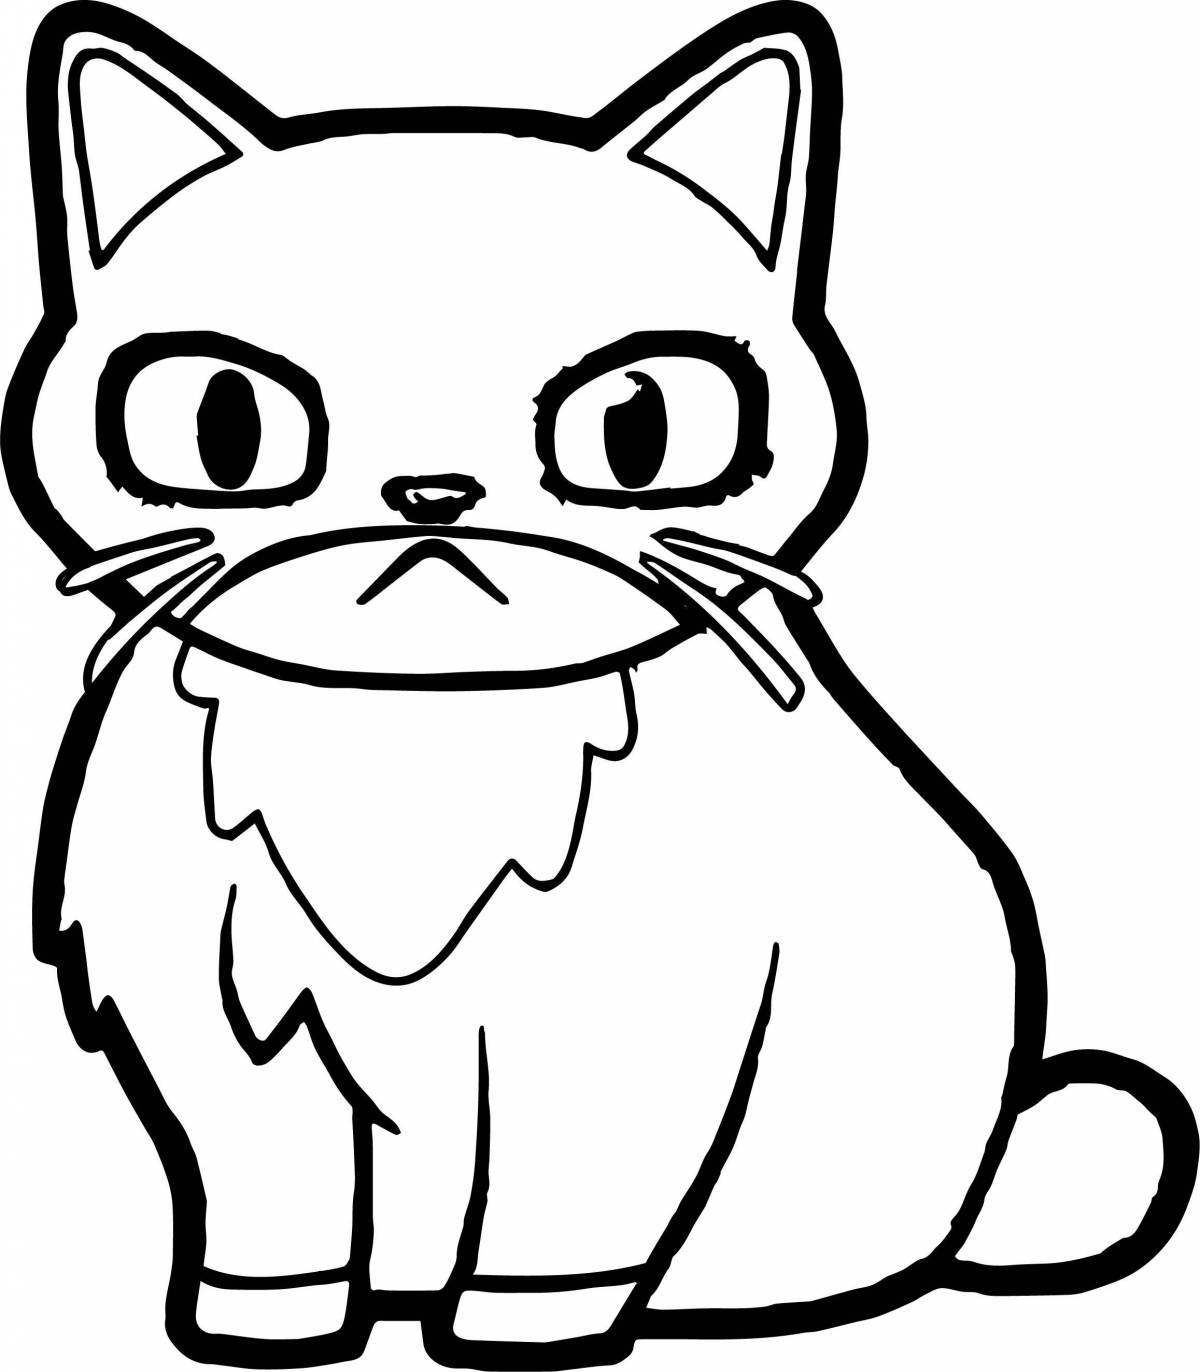 Carton cat #3